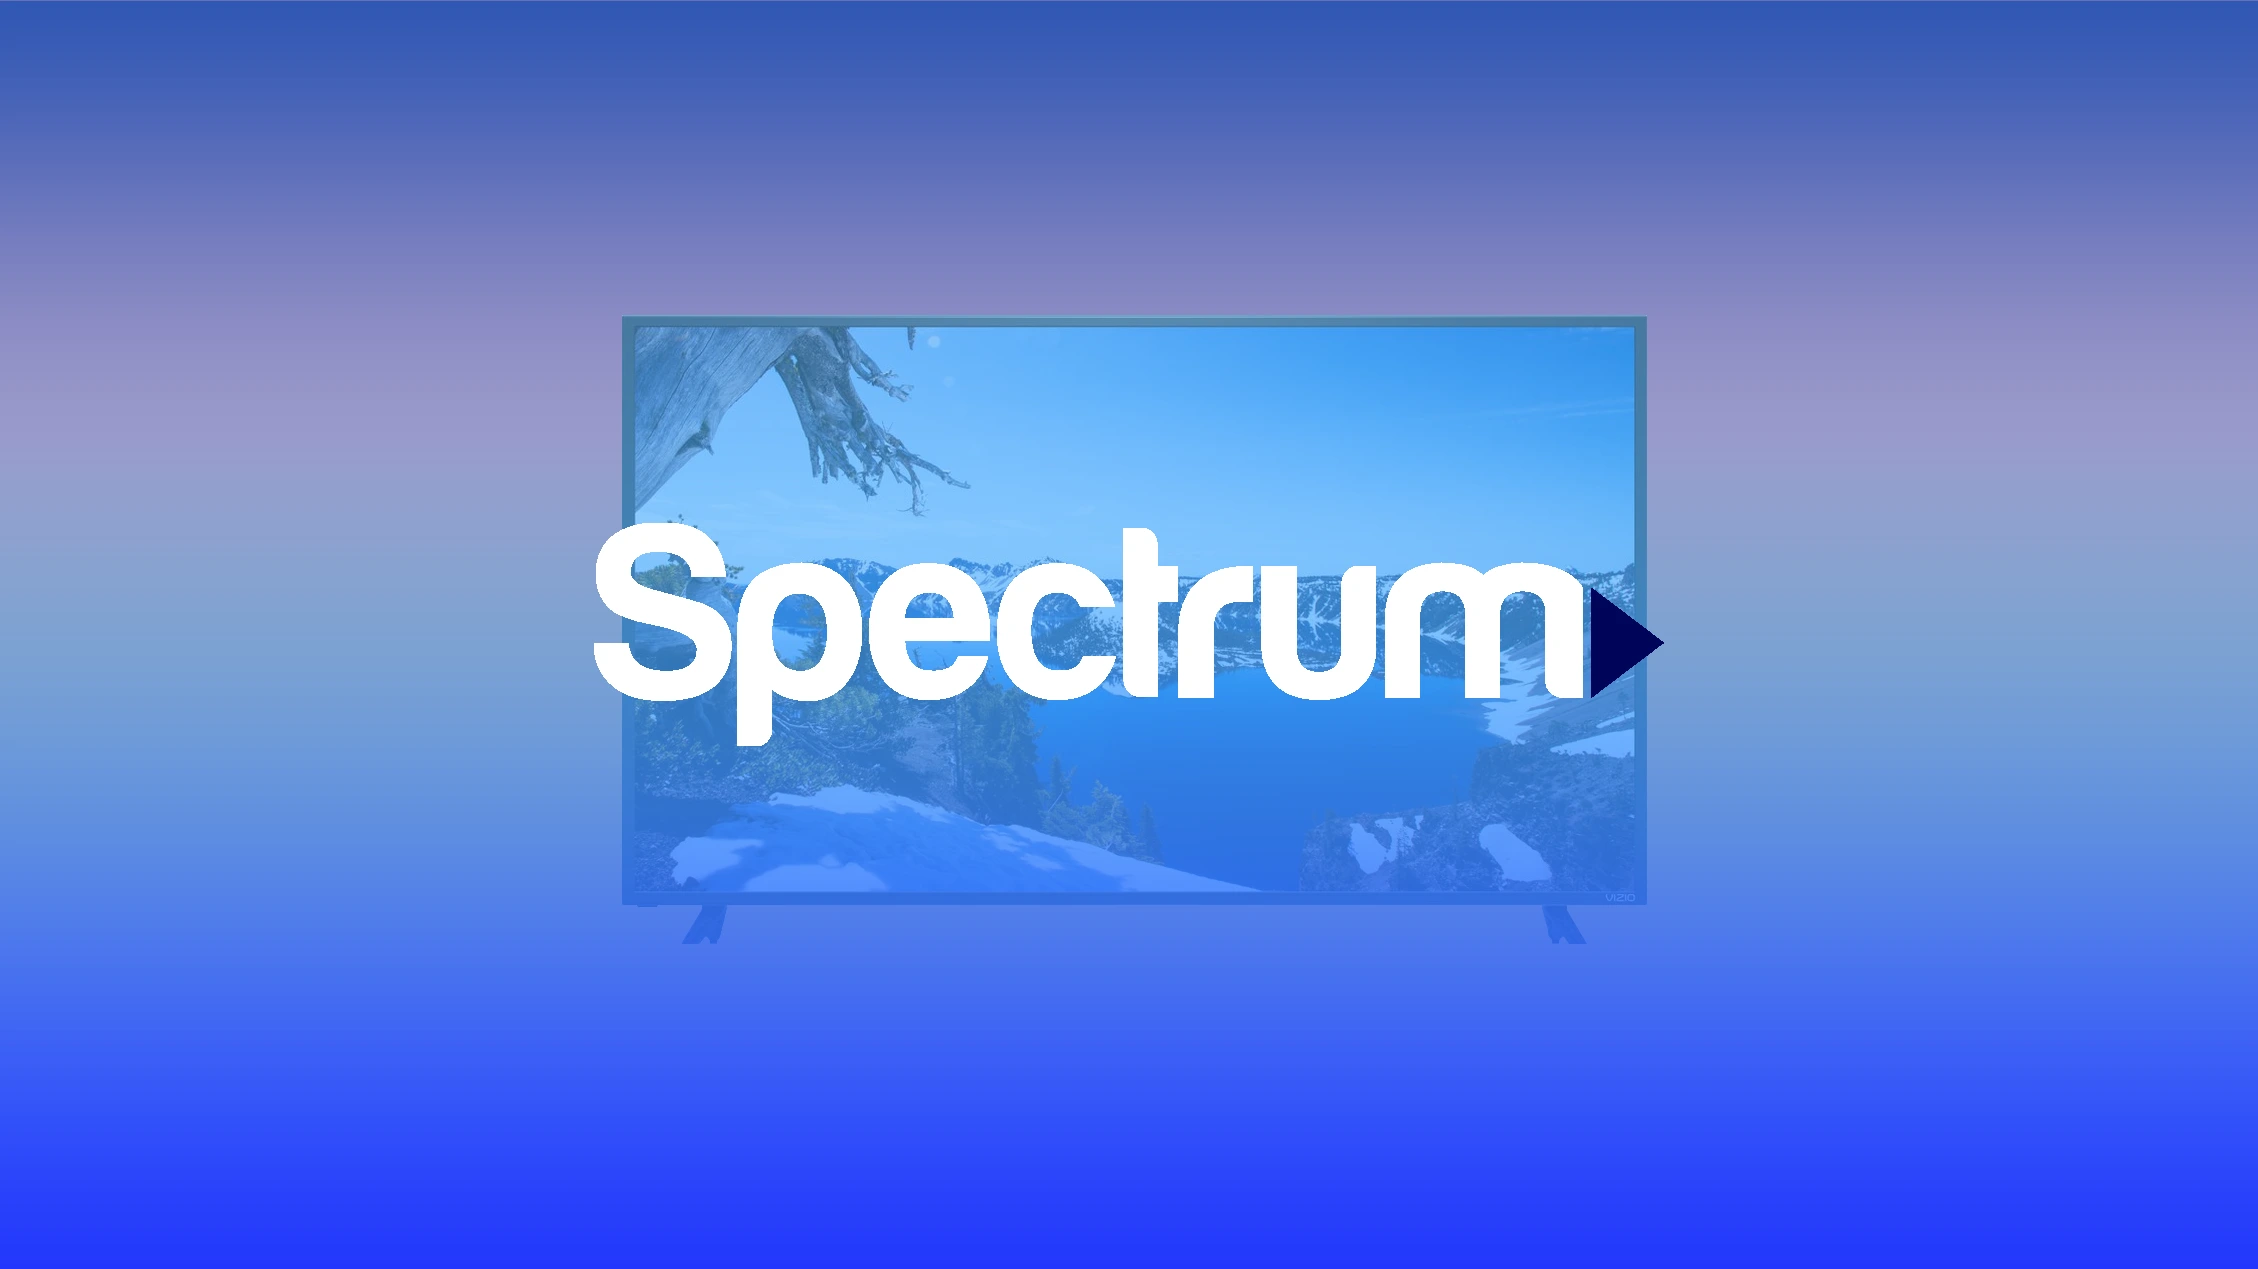 How to uninstall Spectrum App on Vizio Smart TV